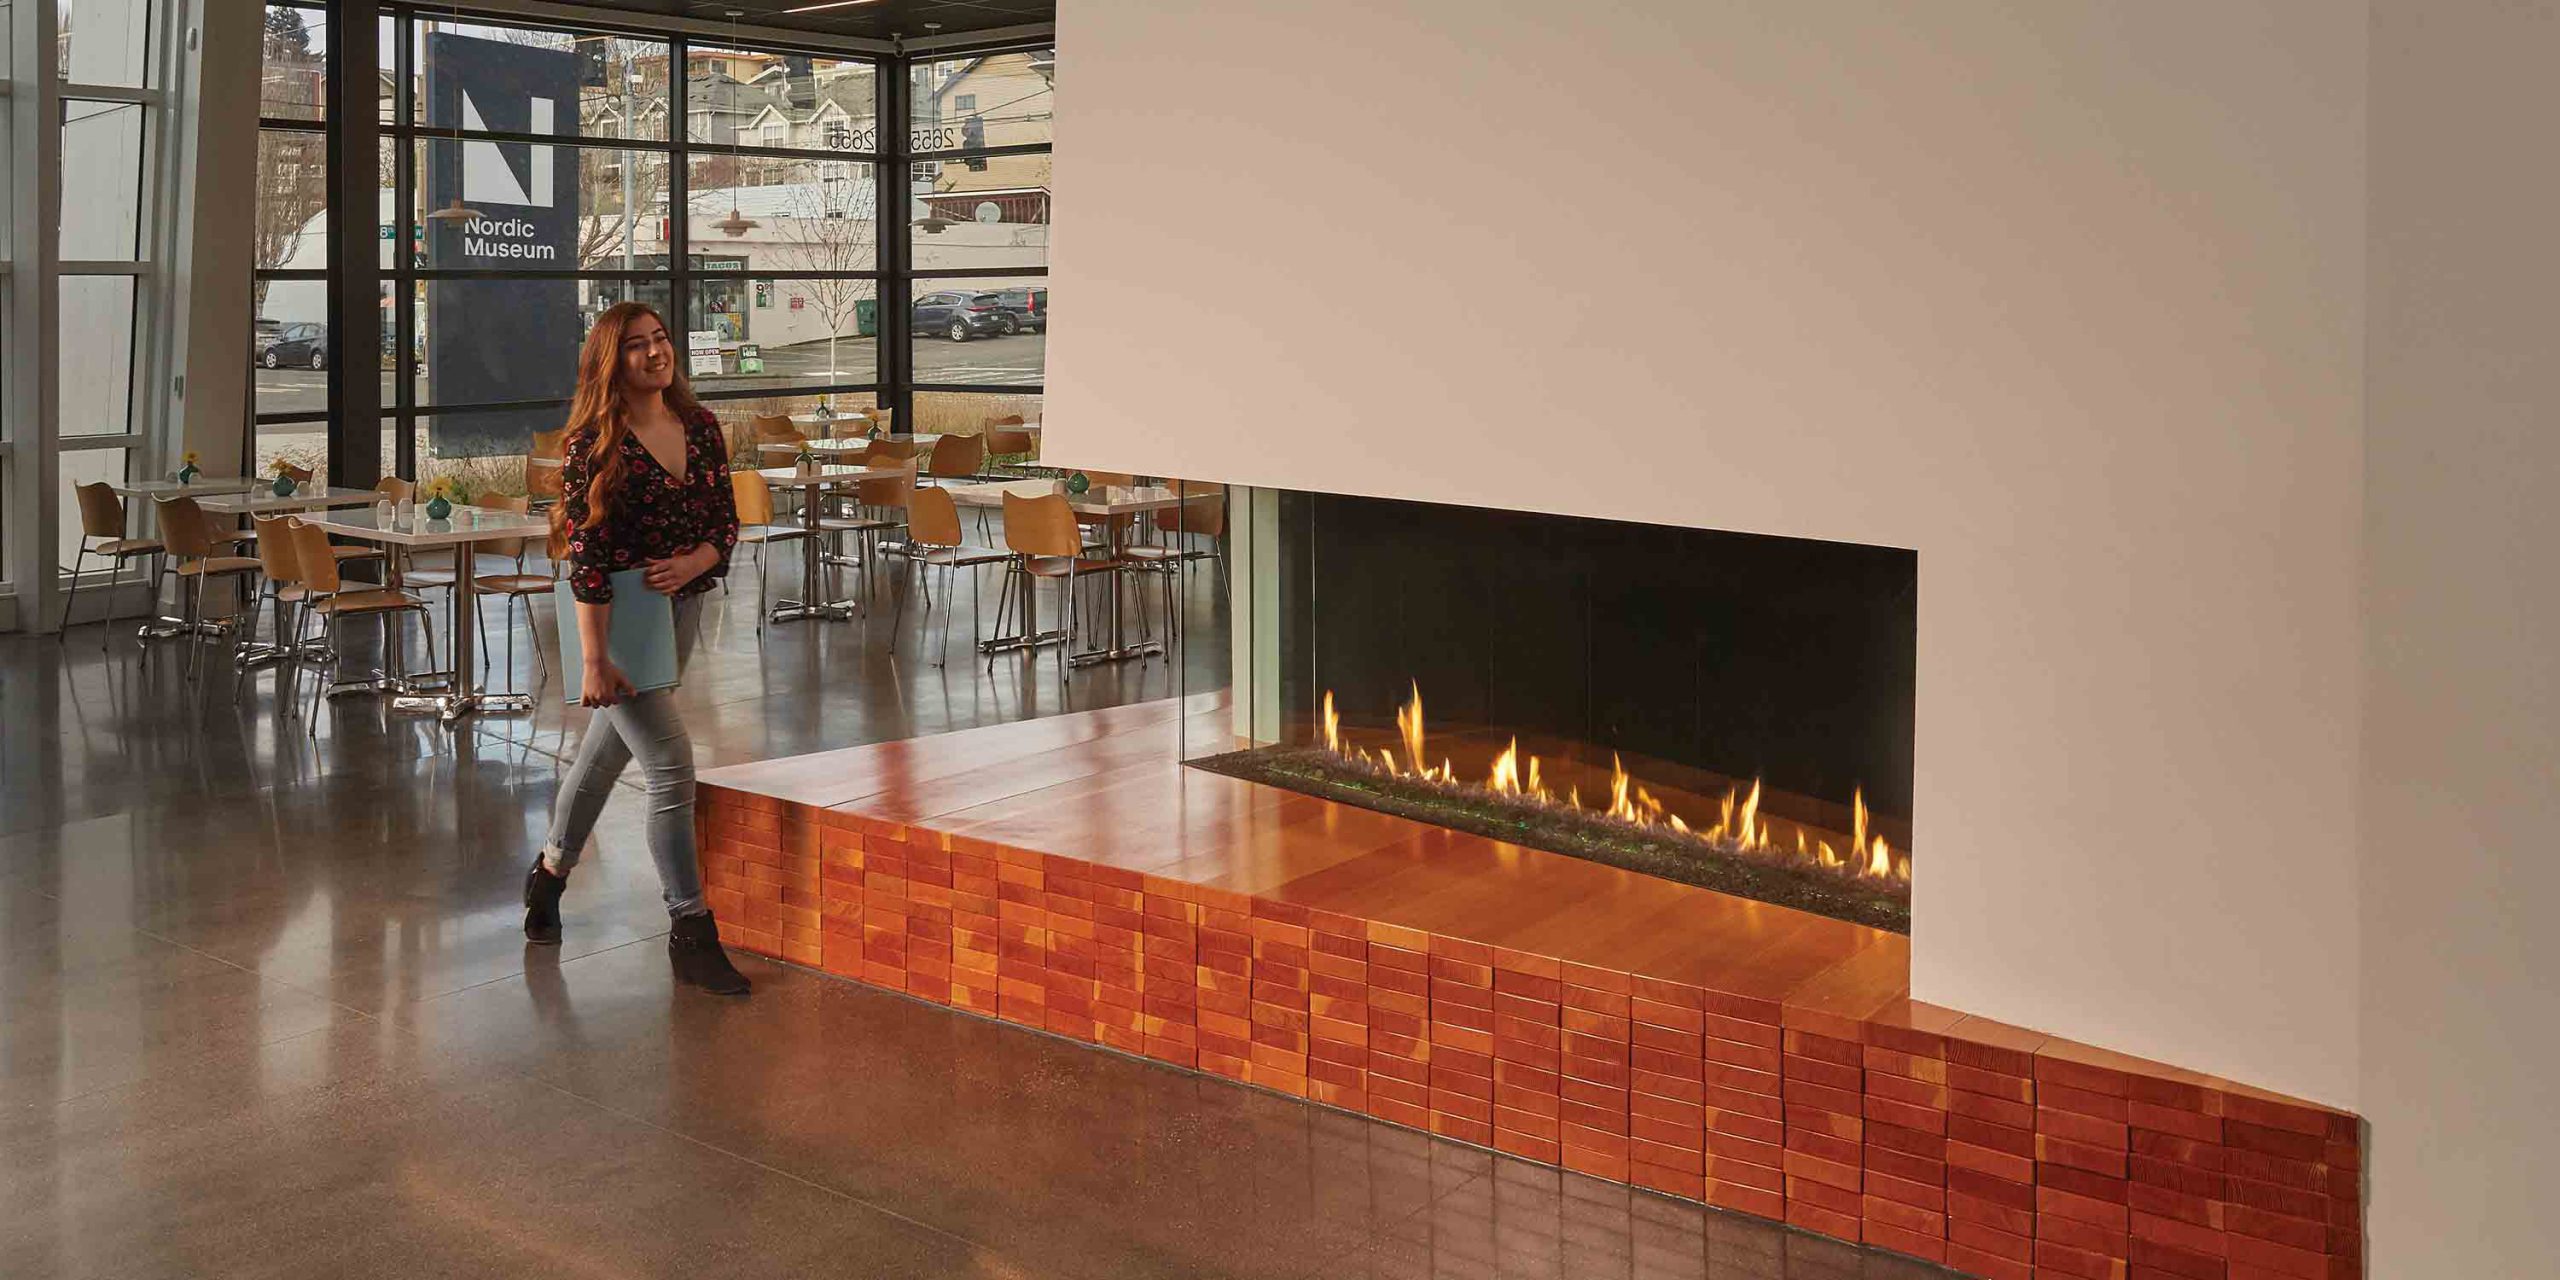 The DaVinci Collection Corner Linear Gas Fireplace